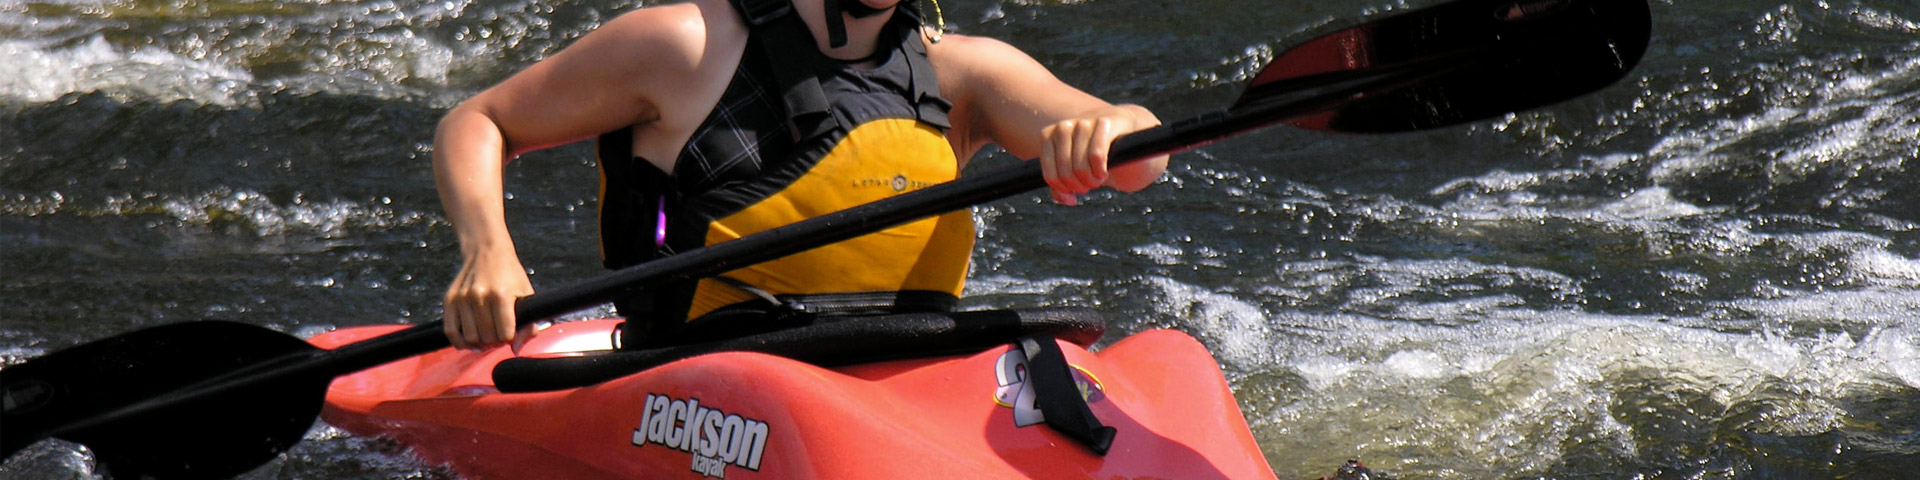 SHRED – Advanced Kayak Day Program by Paddler Co-op - Image 291